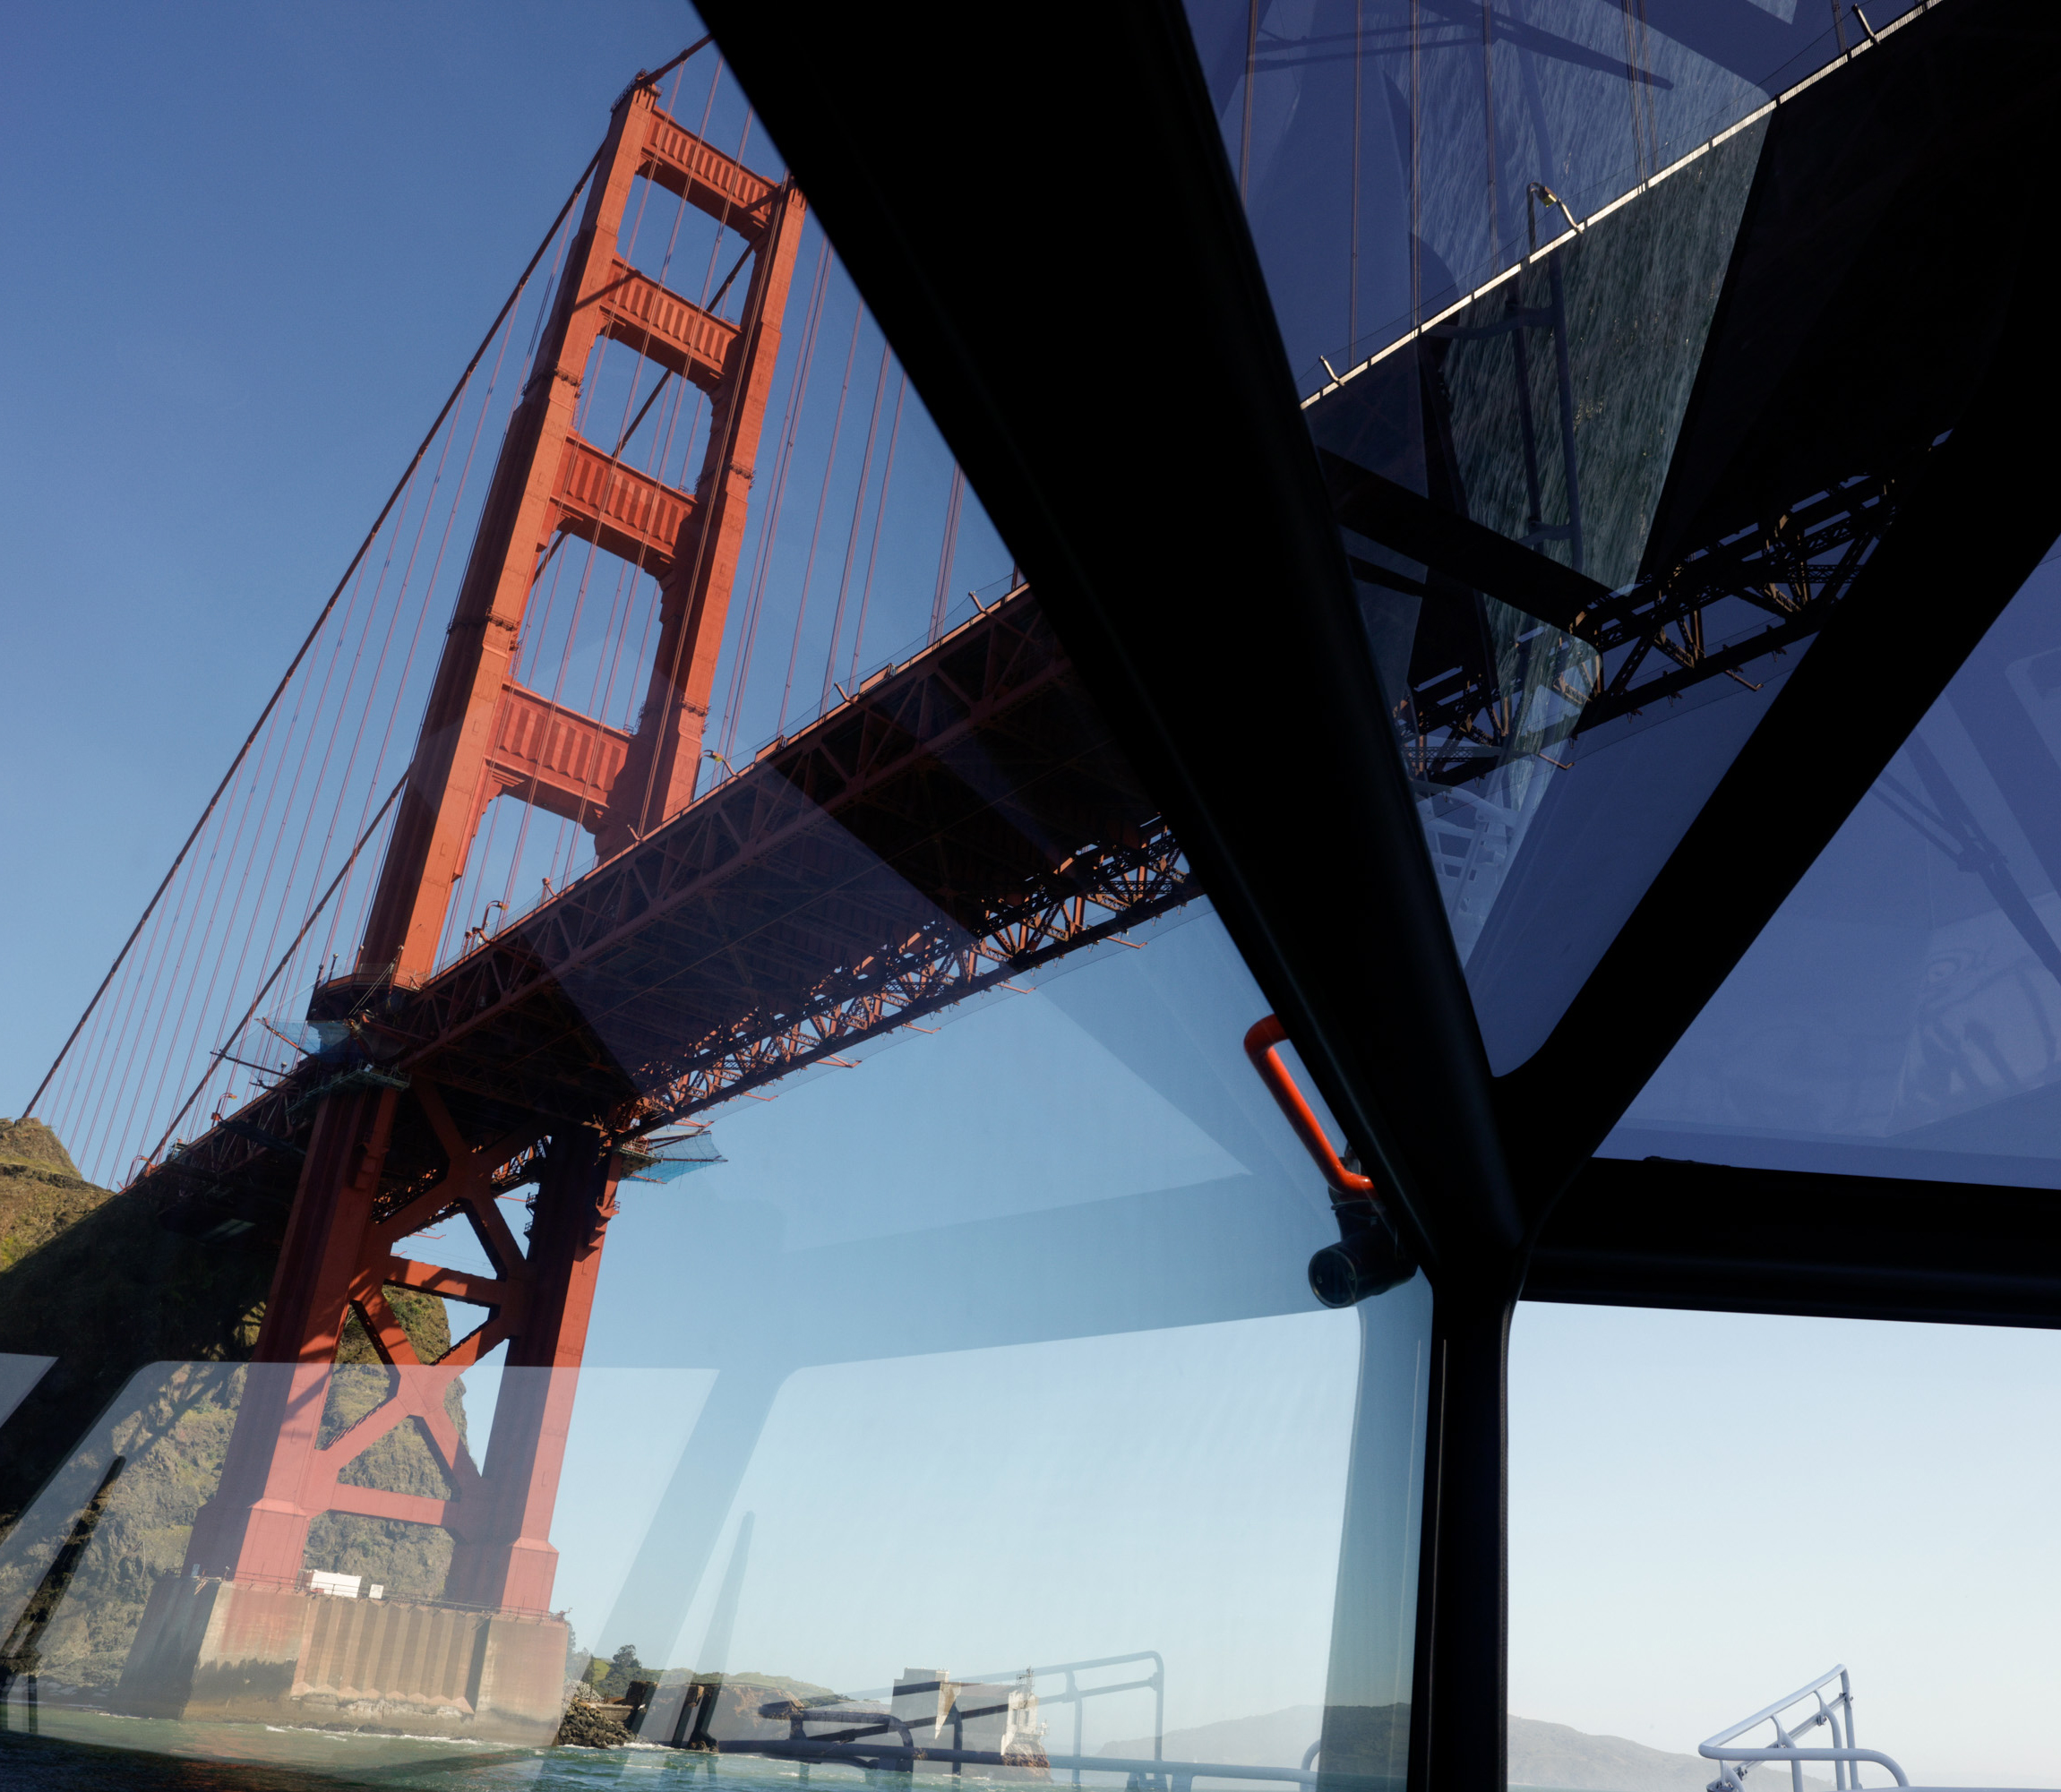 Golden Gate Bridge viewed through geometric windows, with clear skies.